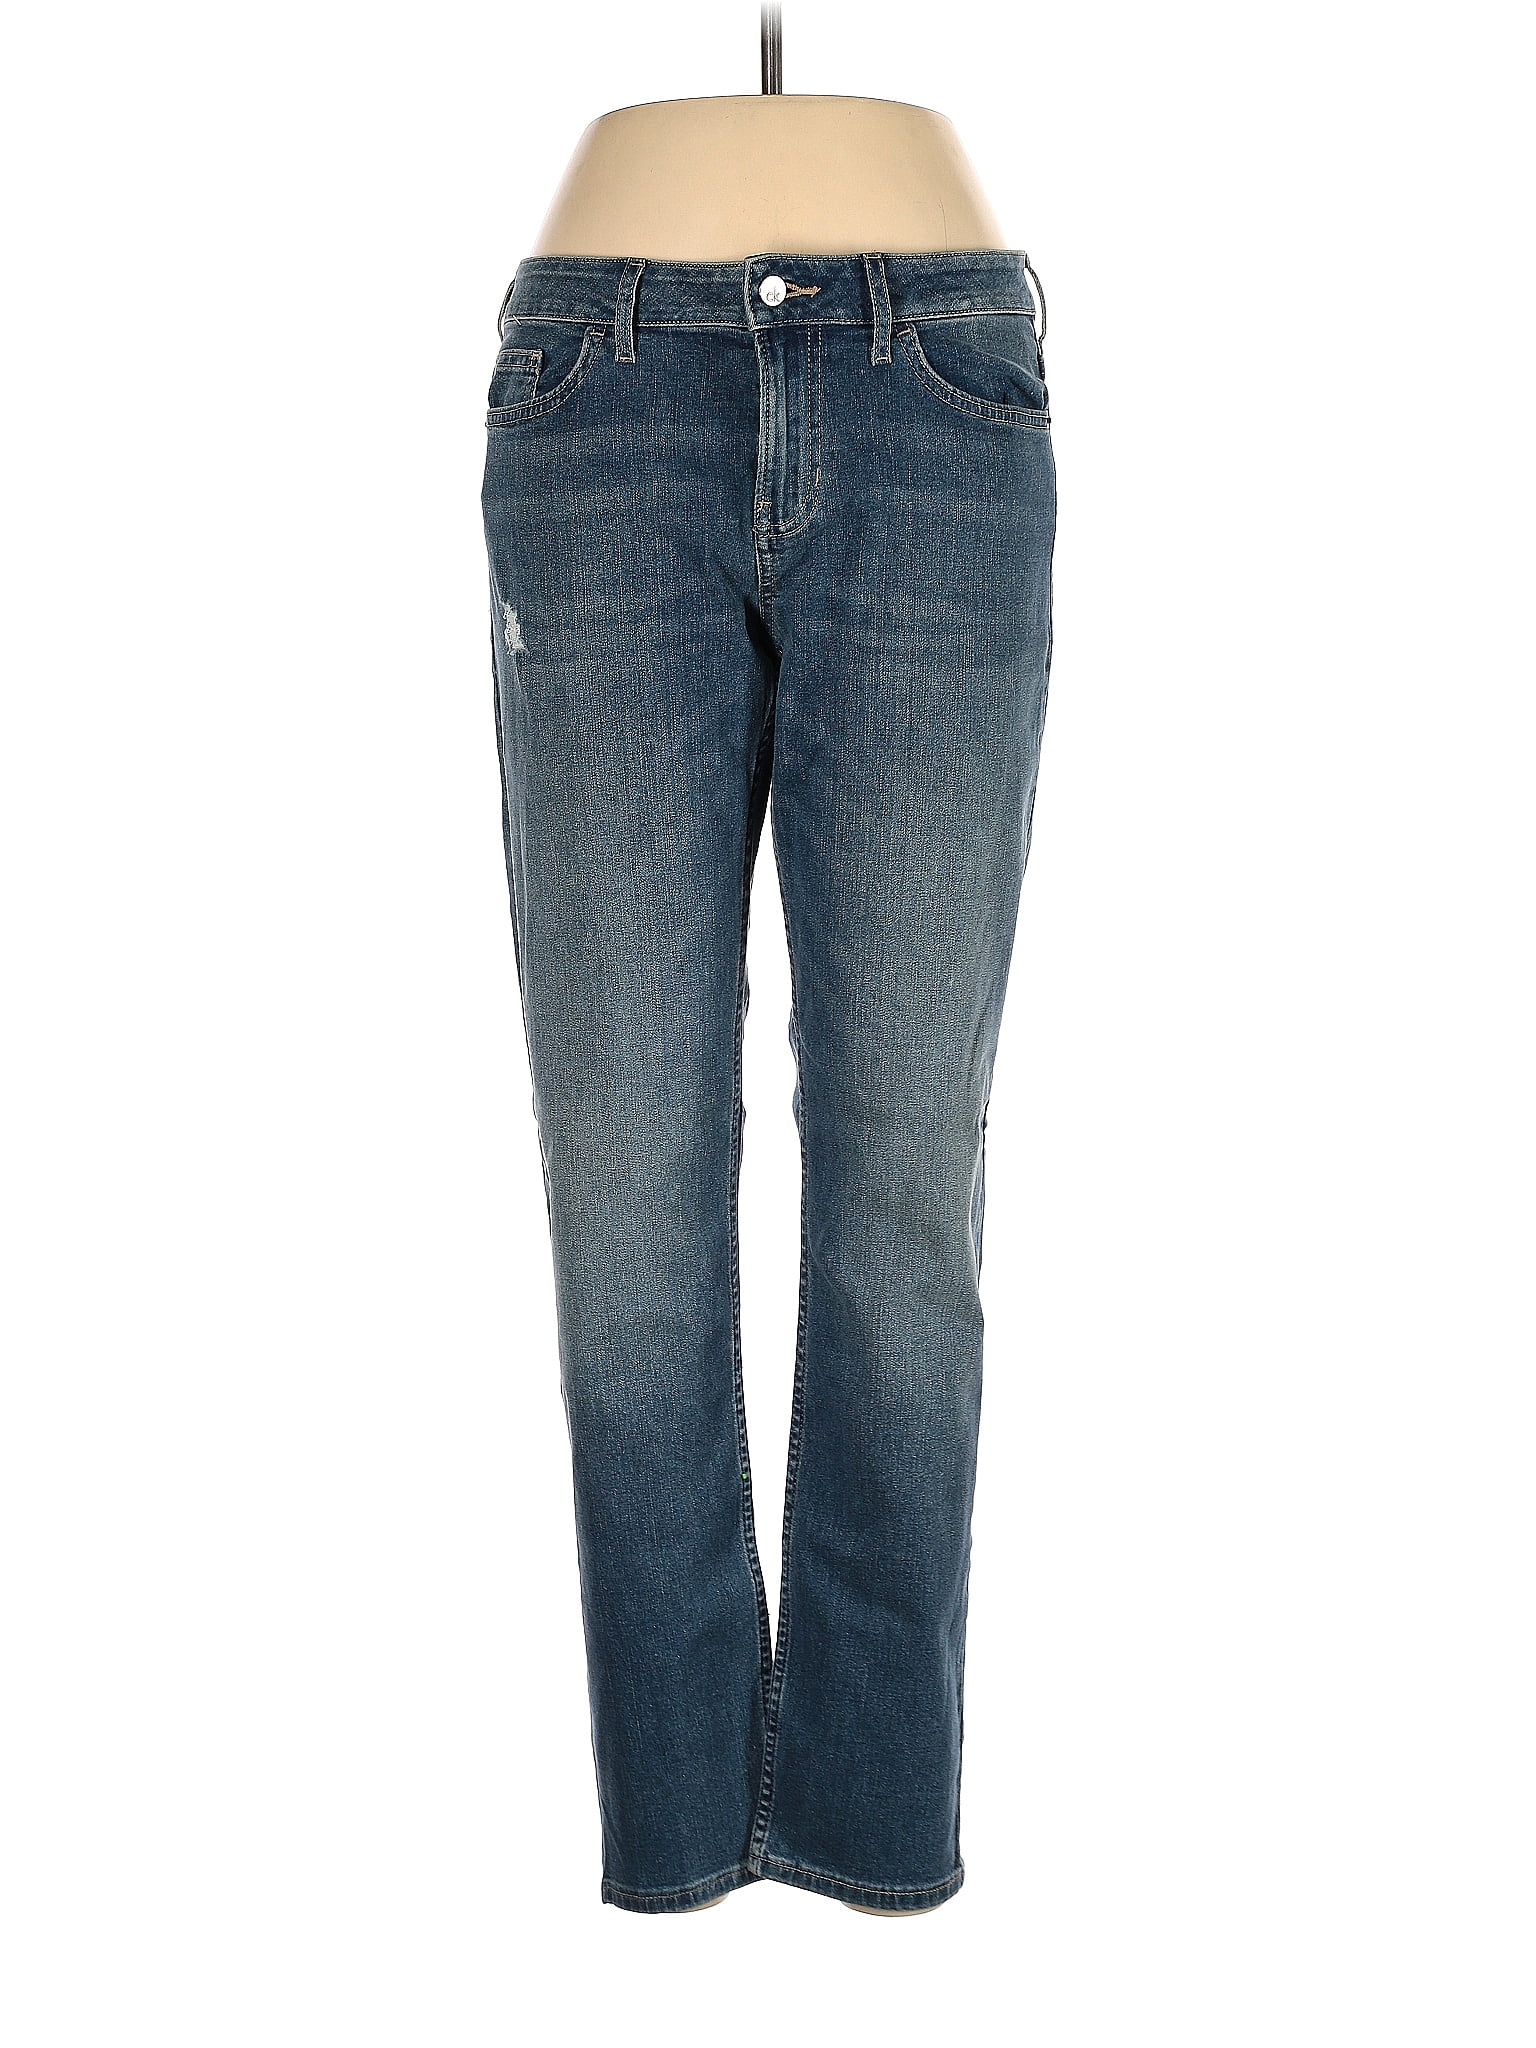 CALVIN KLEIN JEANS Solid Blue Jeans Size 10 - 67% off | thredUP